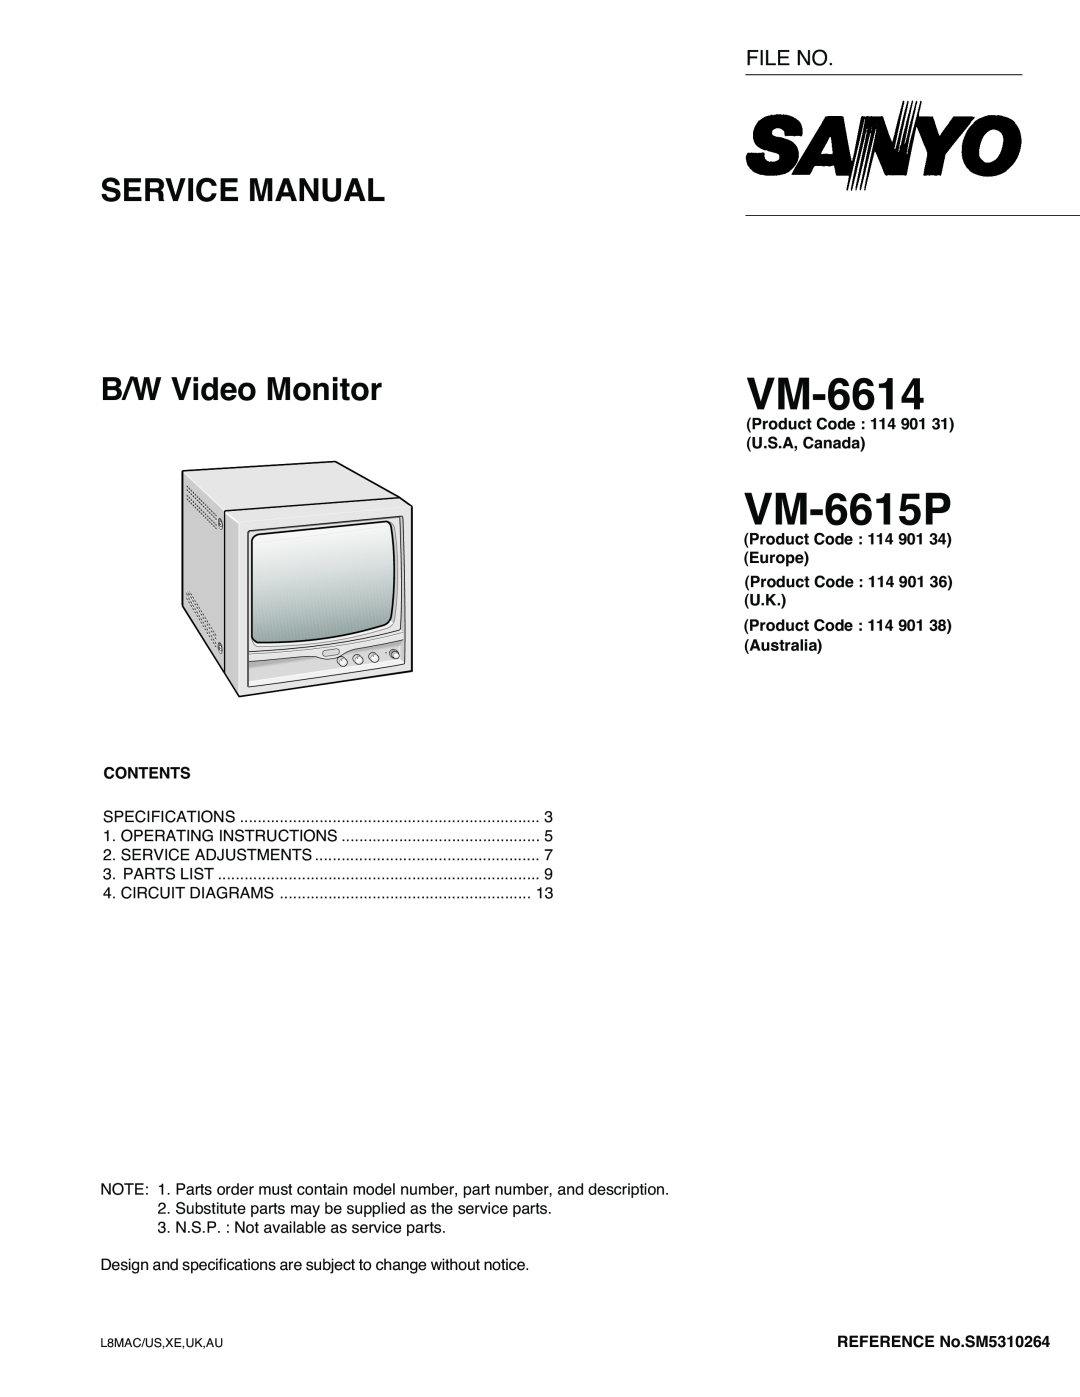 Sanyo VM-6614 VM-6615P, SERVICE MANUAL B/W Video Monitor, File No, Product Code 114 901 U.S.A, Canada, Contents 